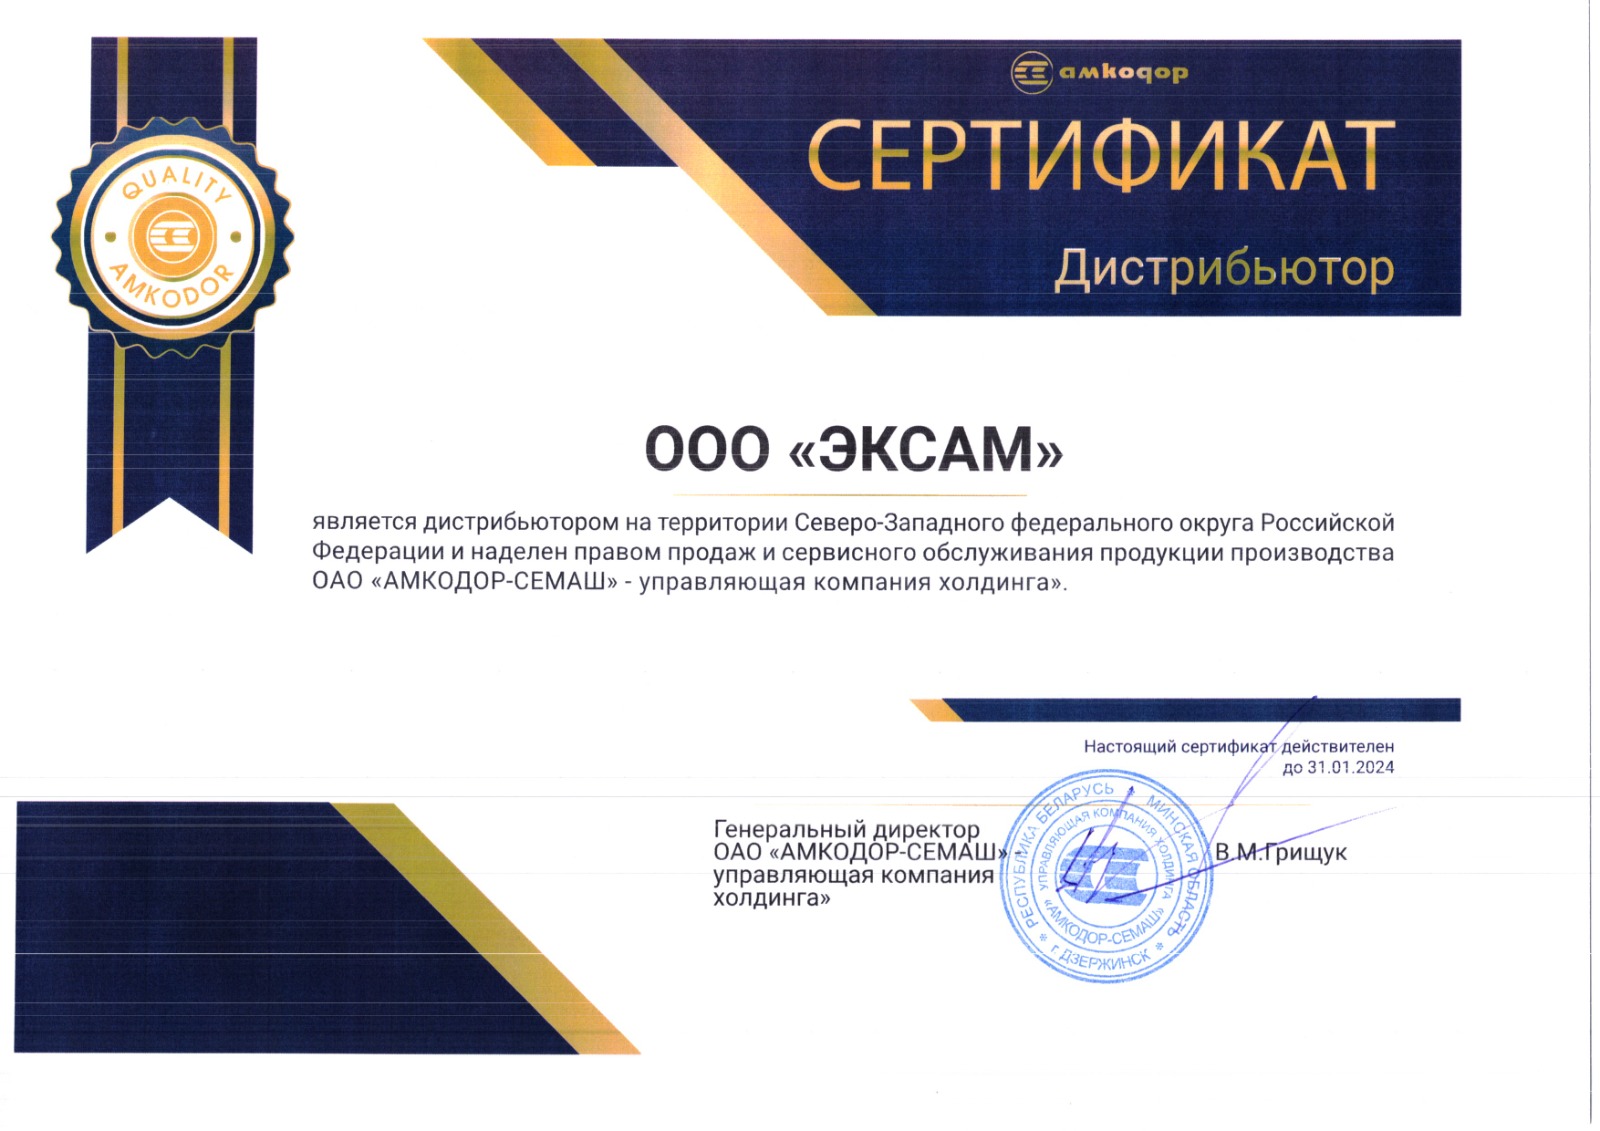 Сертификат дистрибьютора холдинга "АМКОДОР"